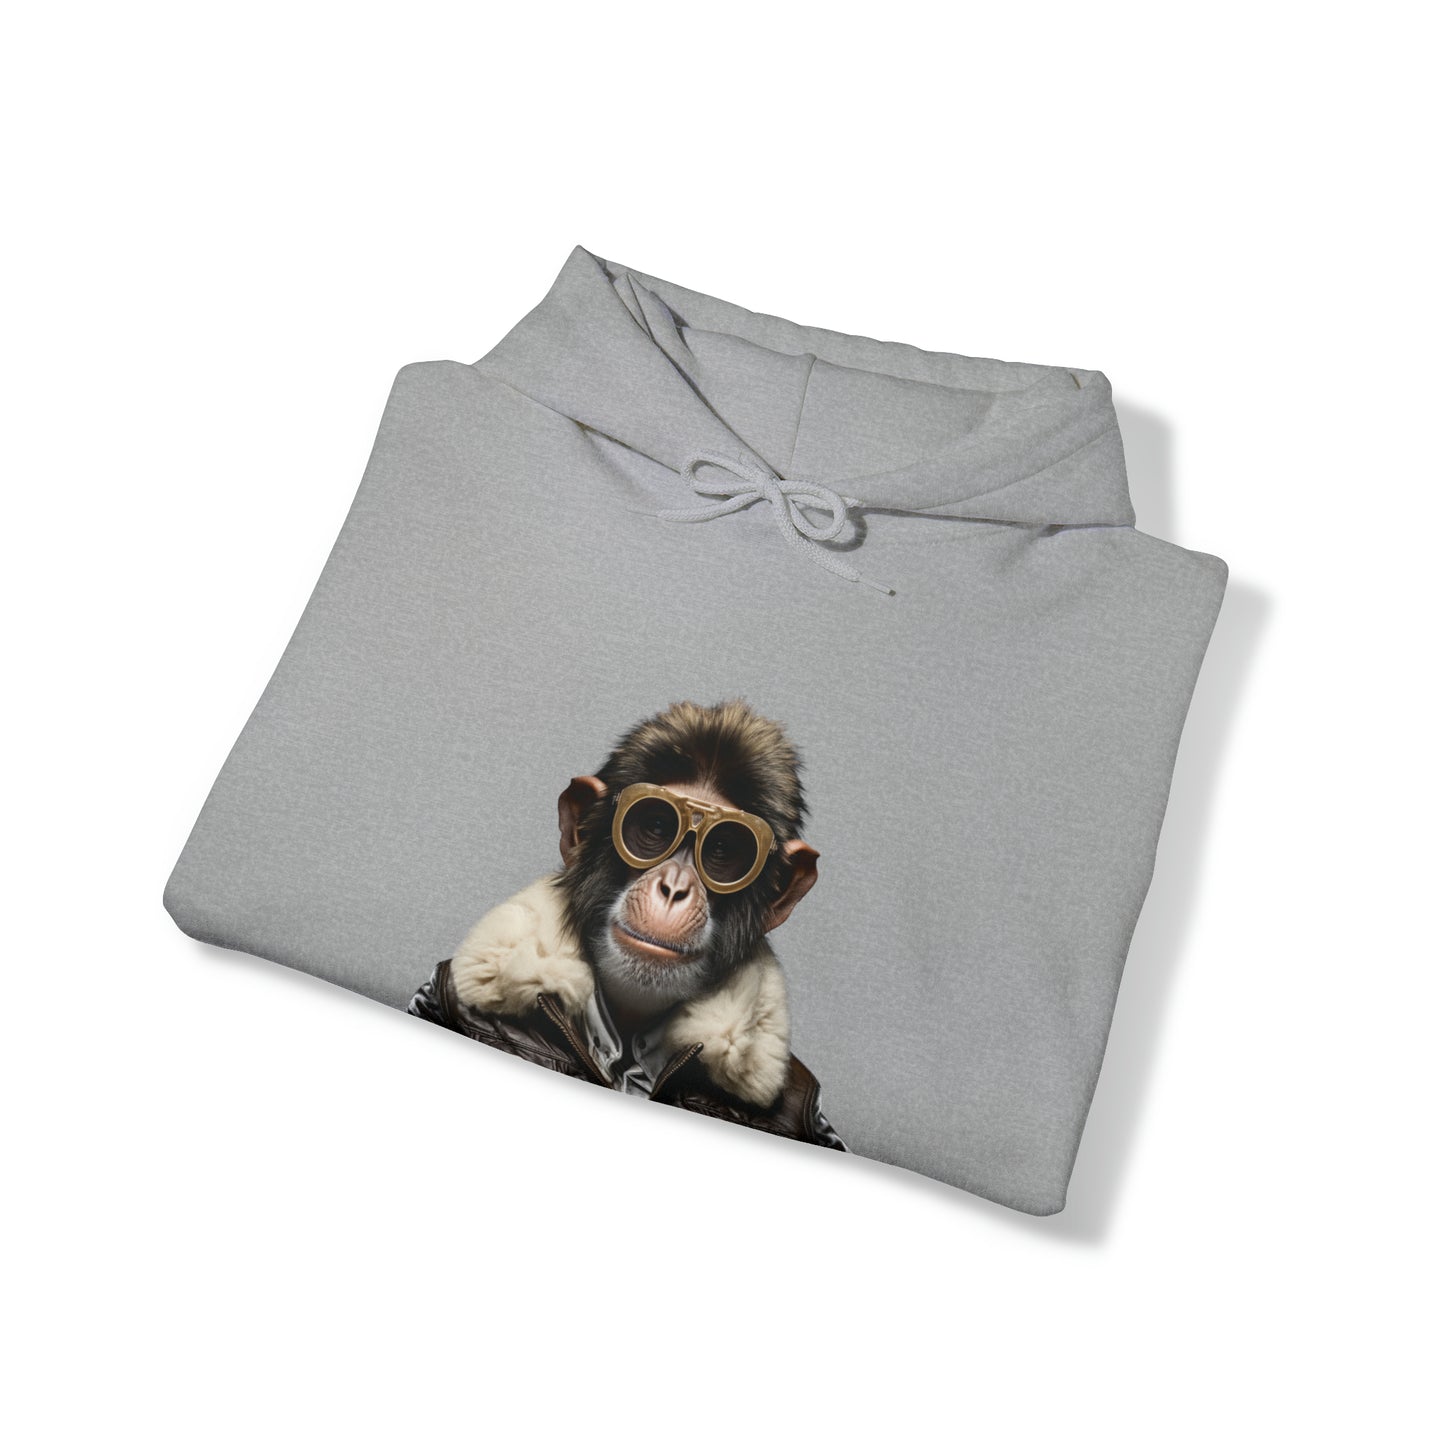 Monkey Leather | Unisex Heavy Blend™ Hooded Sweatshirt